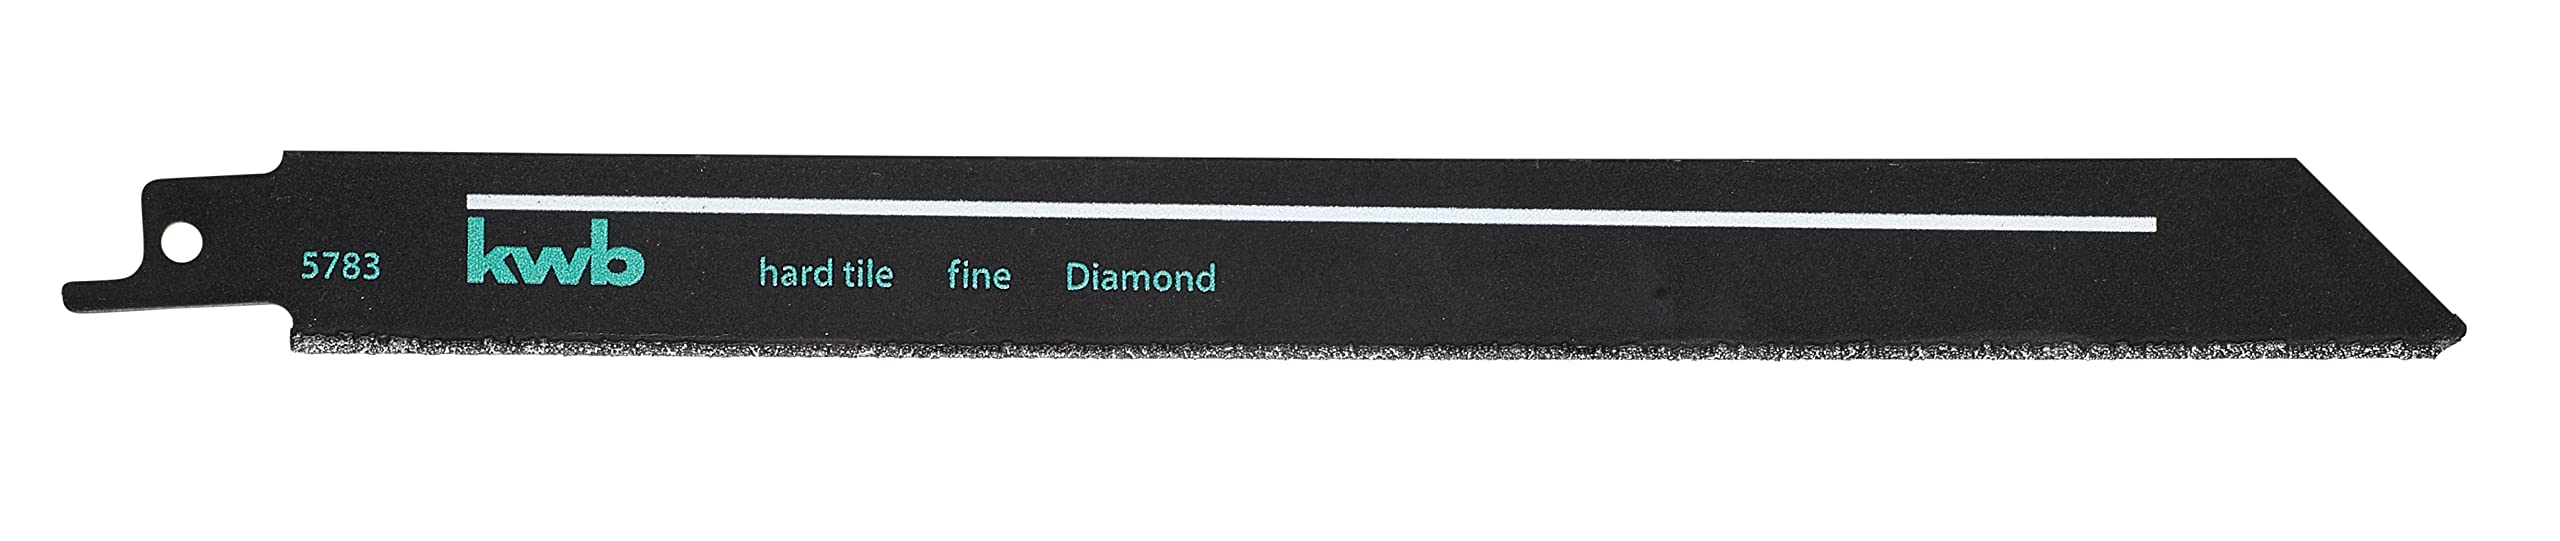 kwb Säbelsägeblätter Diamant für Fliesen- und Keramikbearbeitung, diamantbestreut, flexibler HCS Stahl, schwarz lackiert, feiner Schnitt, 1/2'' Universal-Schaft